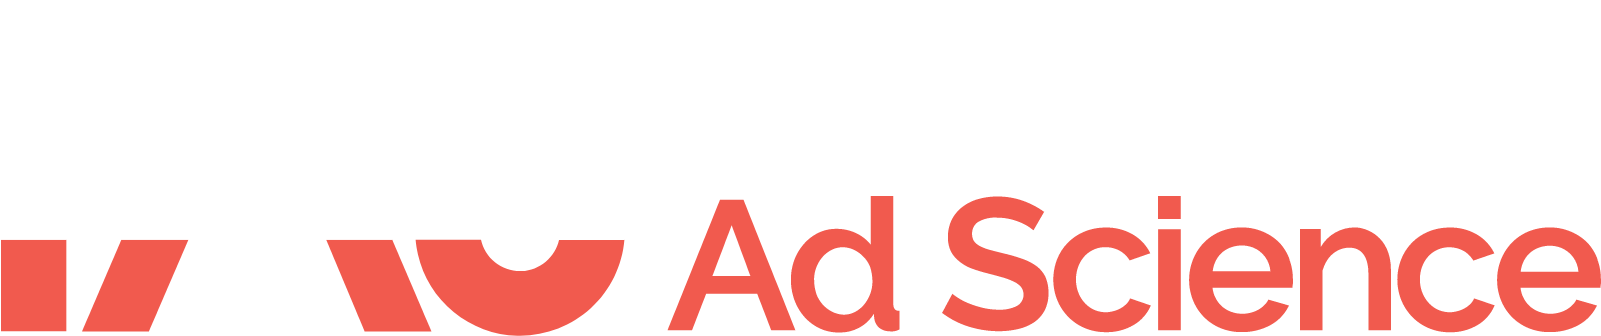 Integral Ad Science Logo groß für dunkle Hintergründe (transparentes PNG)